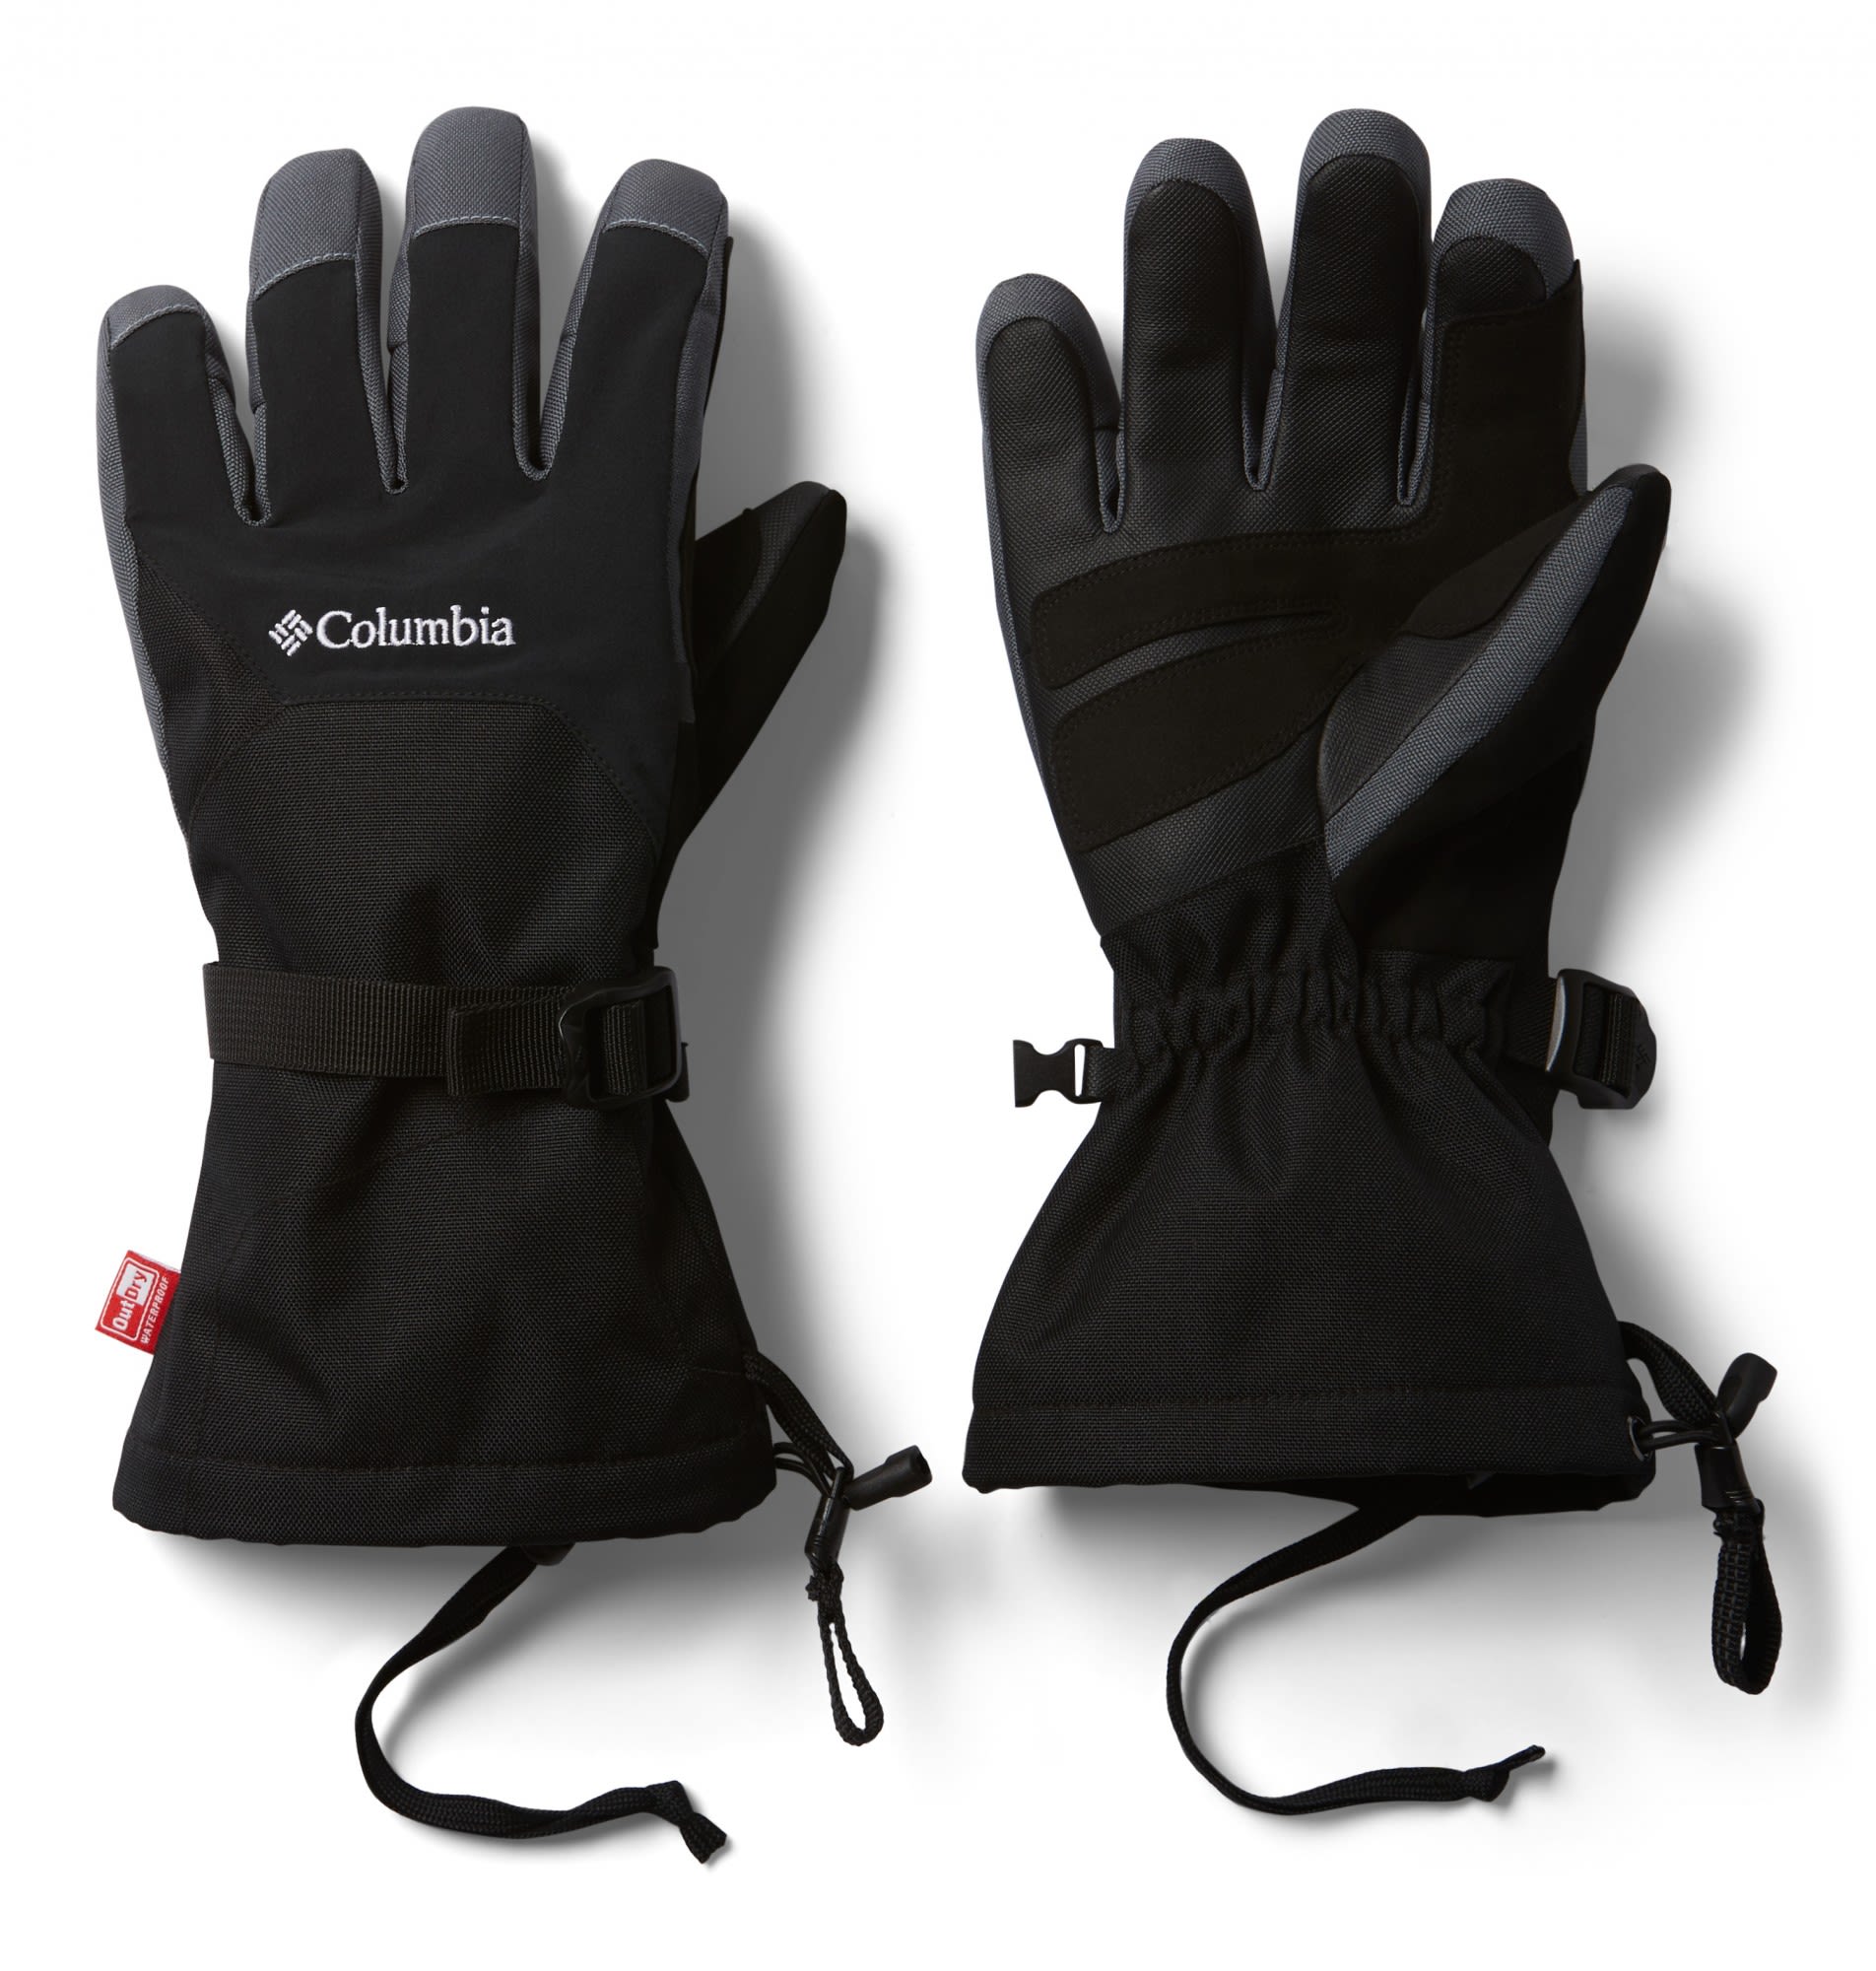 Columbia Inferno Range Glove Schwarz- Male Fingerhandschuhe- Grsse M - Farbe Black unter Columbia